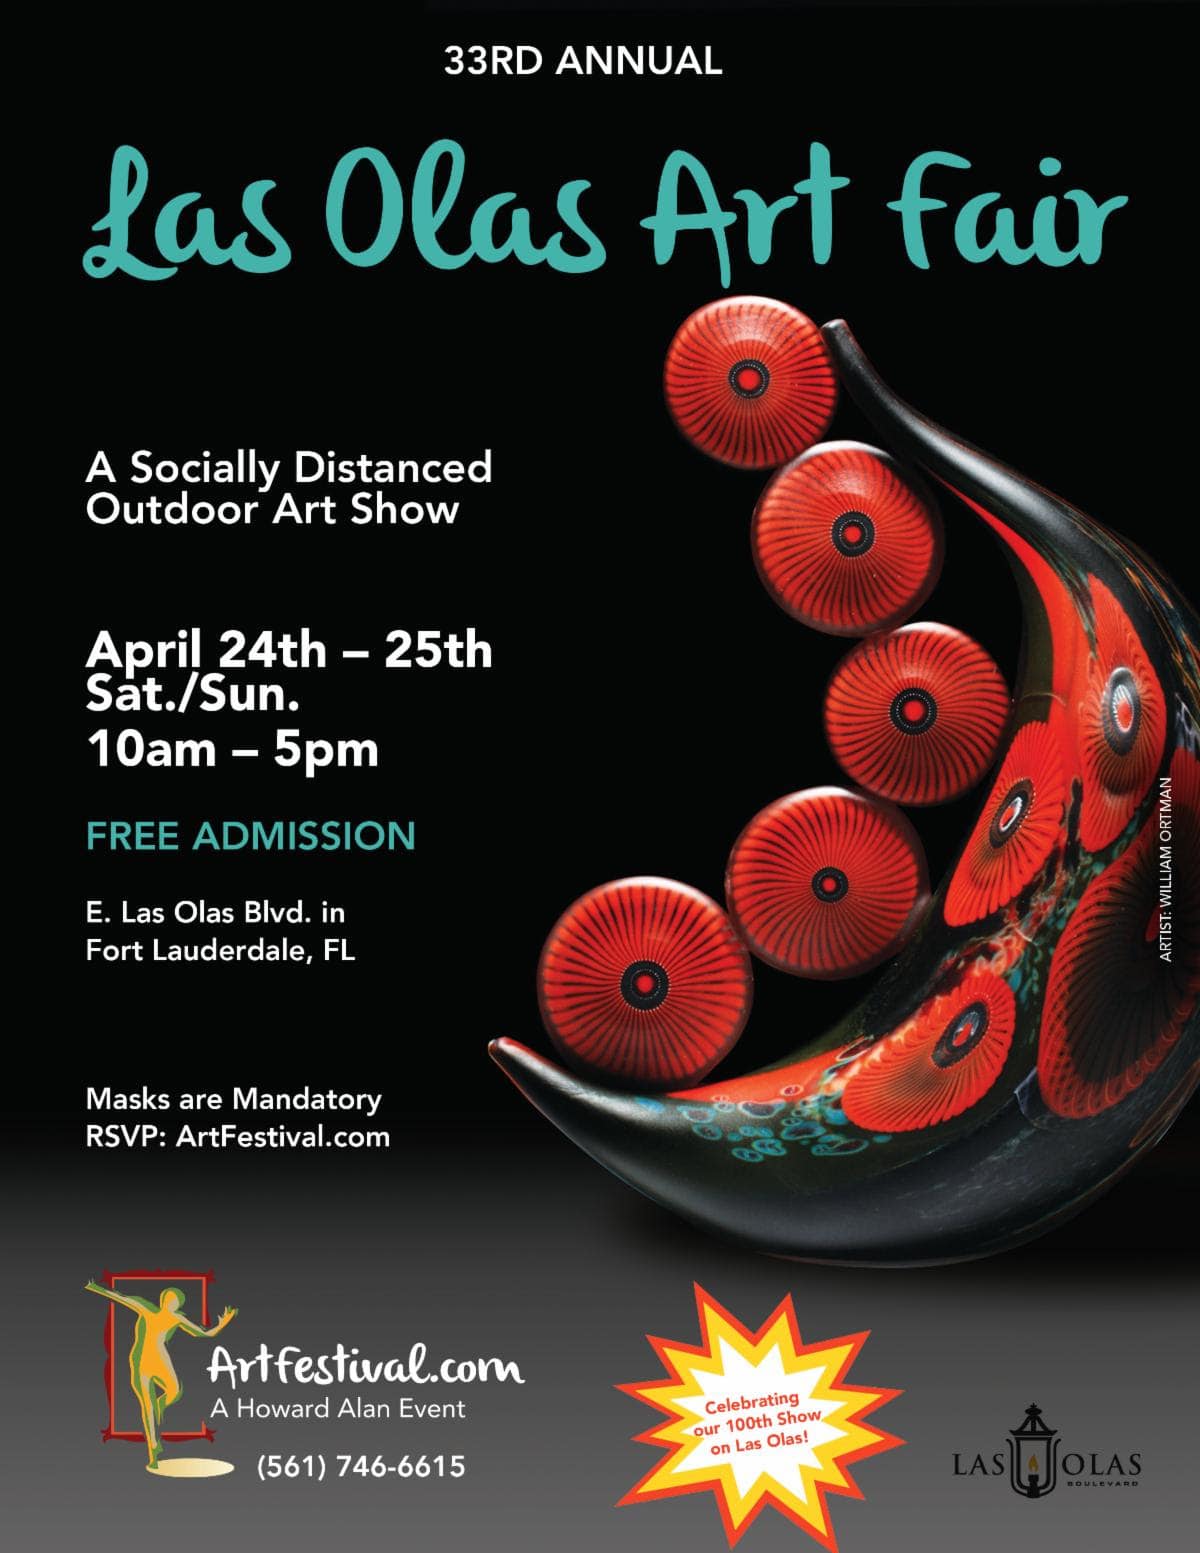 Las Olas Art Fair & Festival - April 24 to 25, 2021